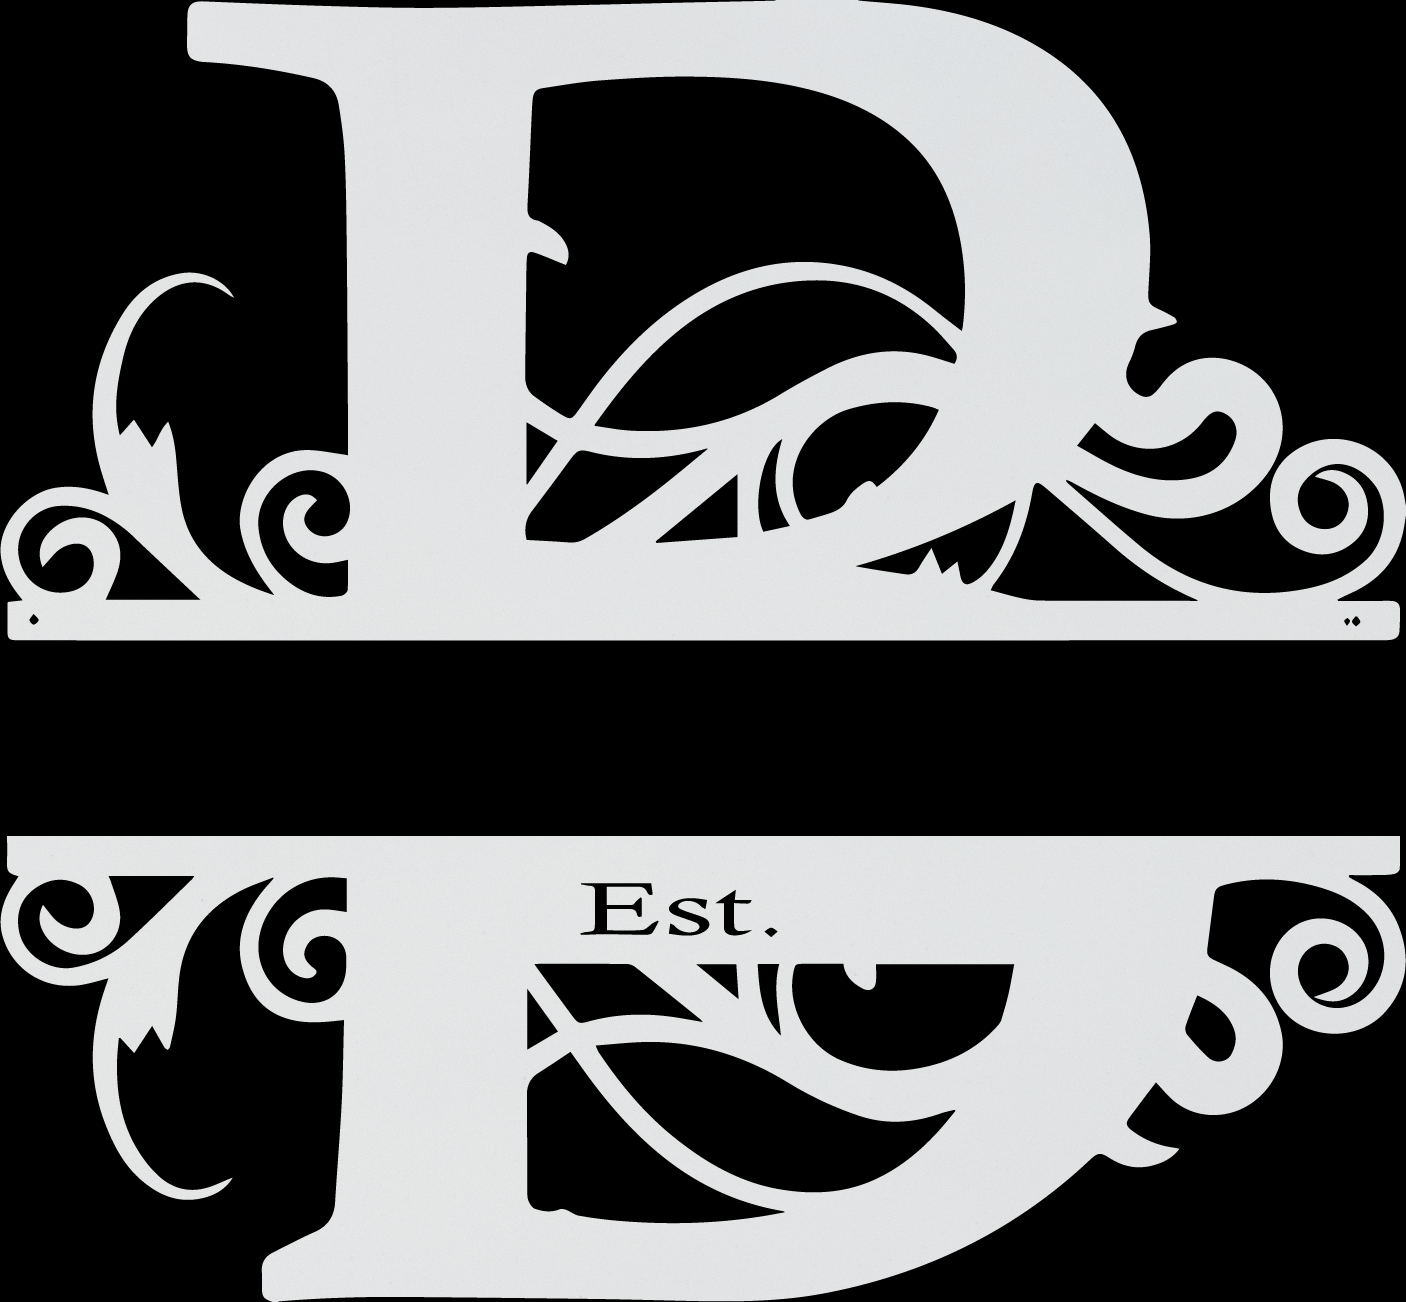 "B" Monogram with Established Date